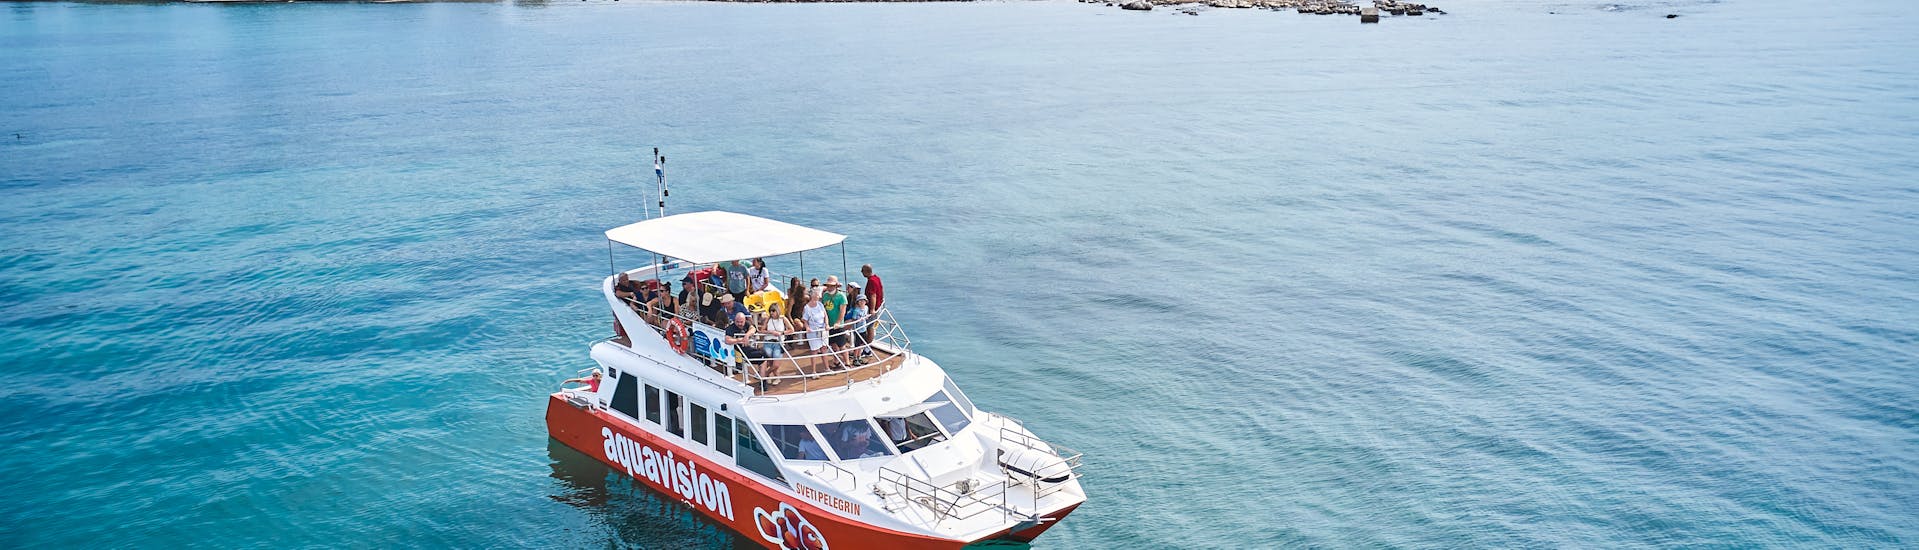 Aquavision's Glassbottom Catamaran where people are enjoying the views on the sundeck.